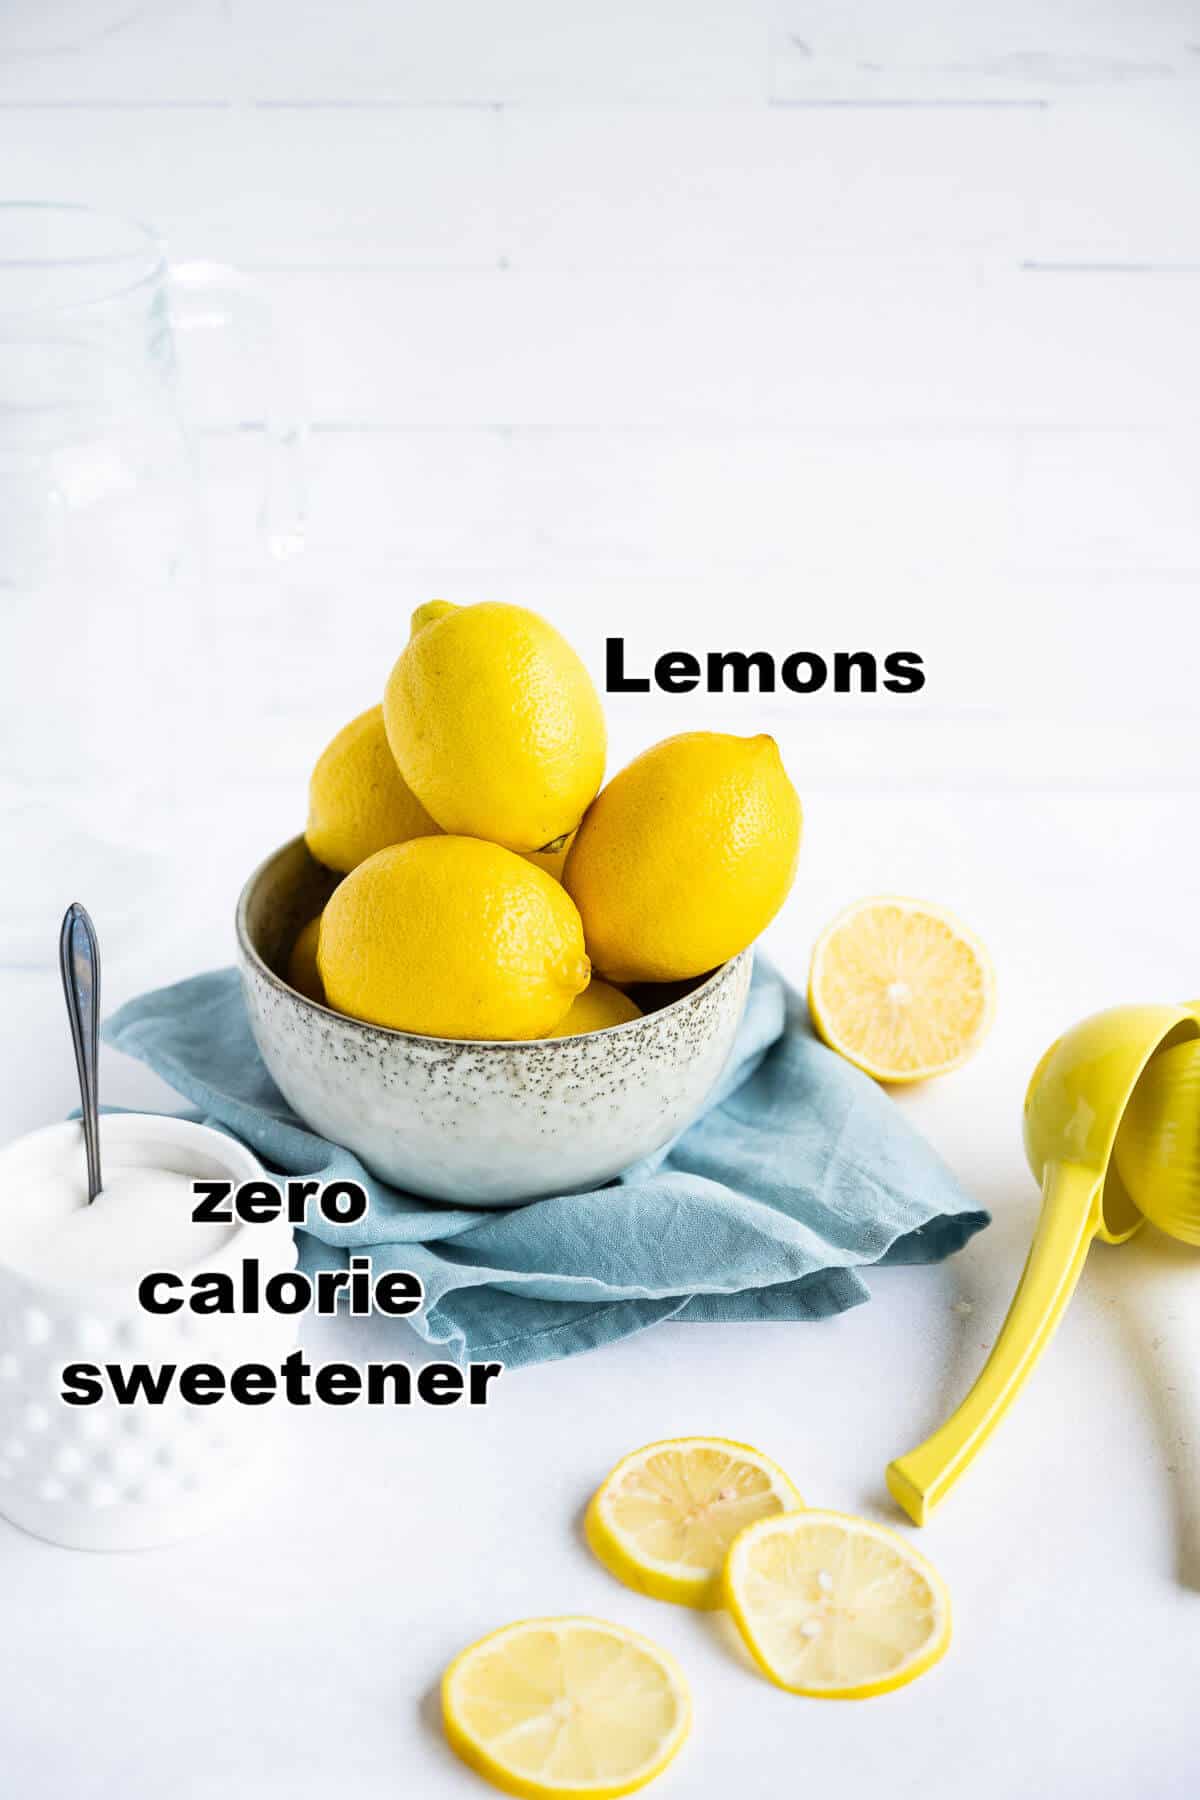 Ingredients for keto lemonade